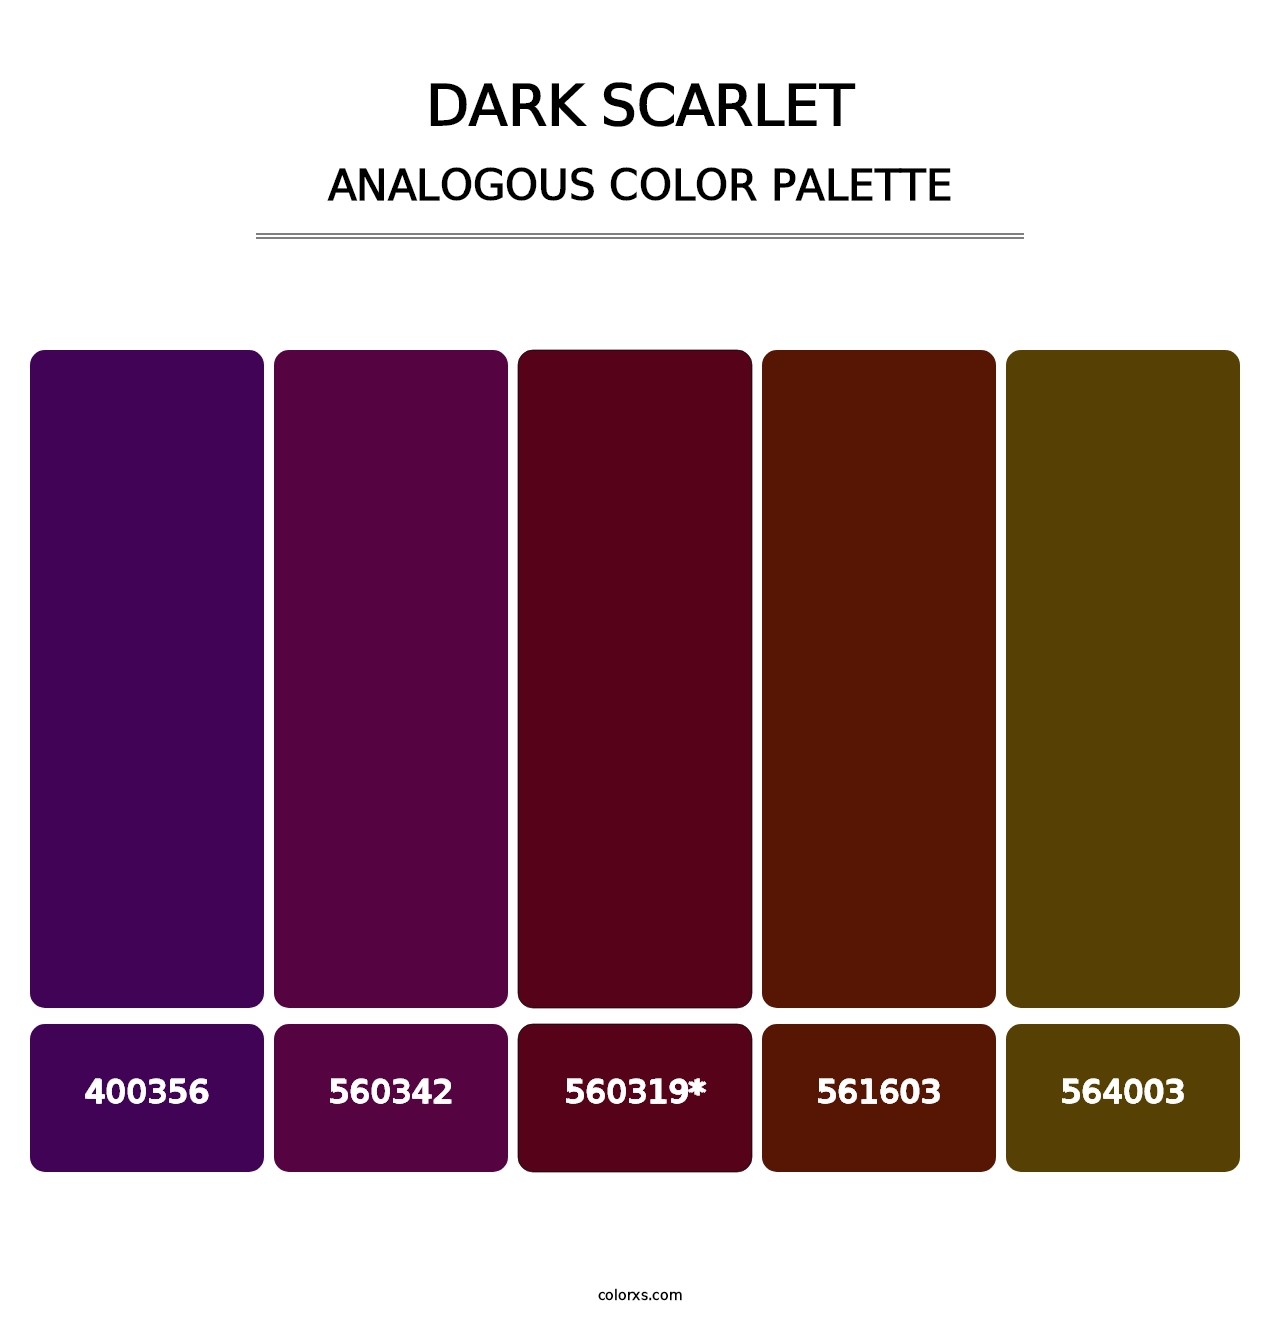 Dark Scarlet - Analogous Color Palette